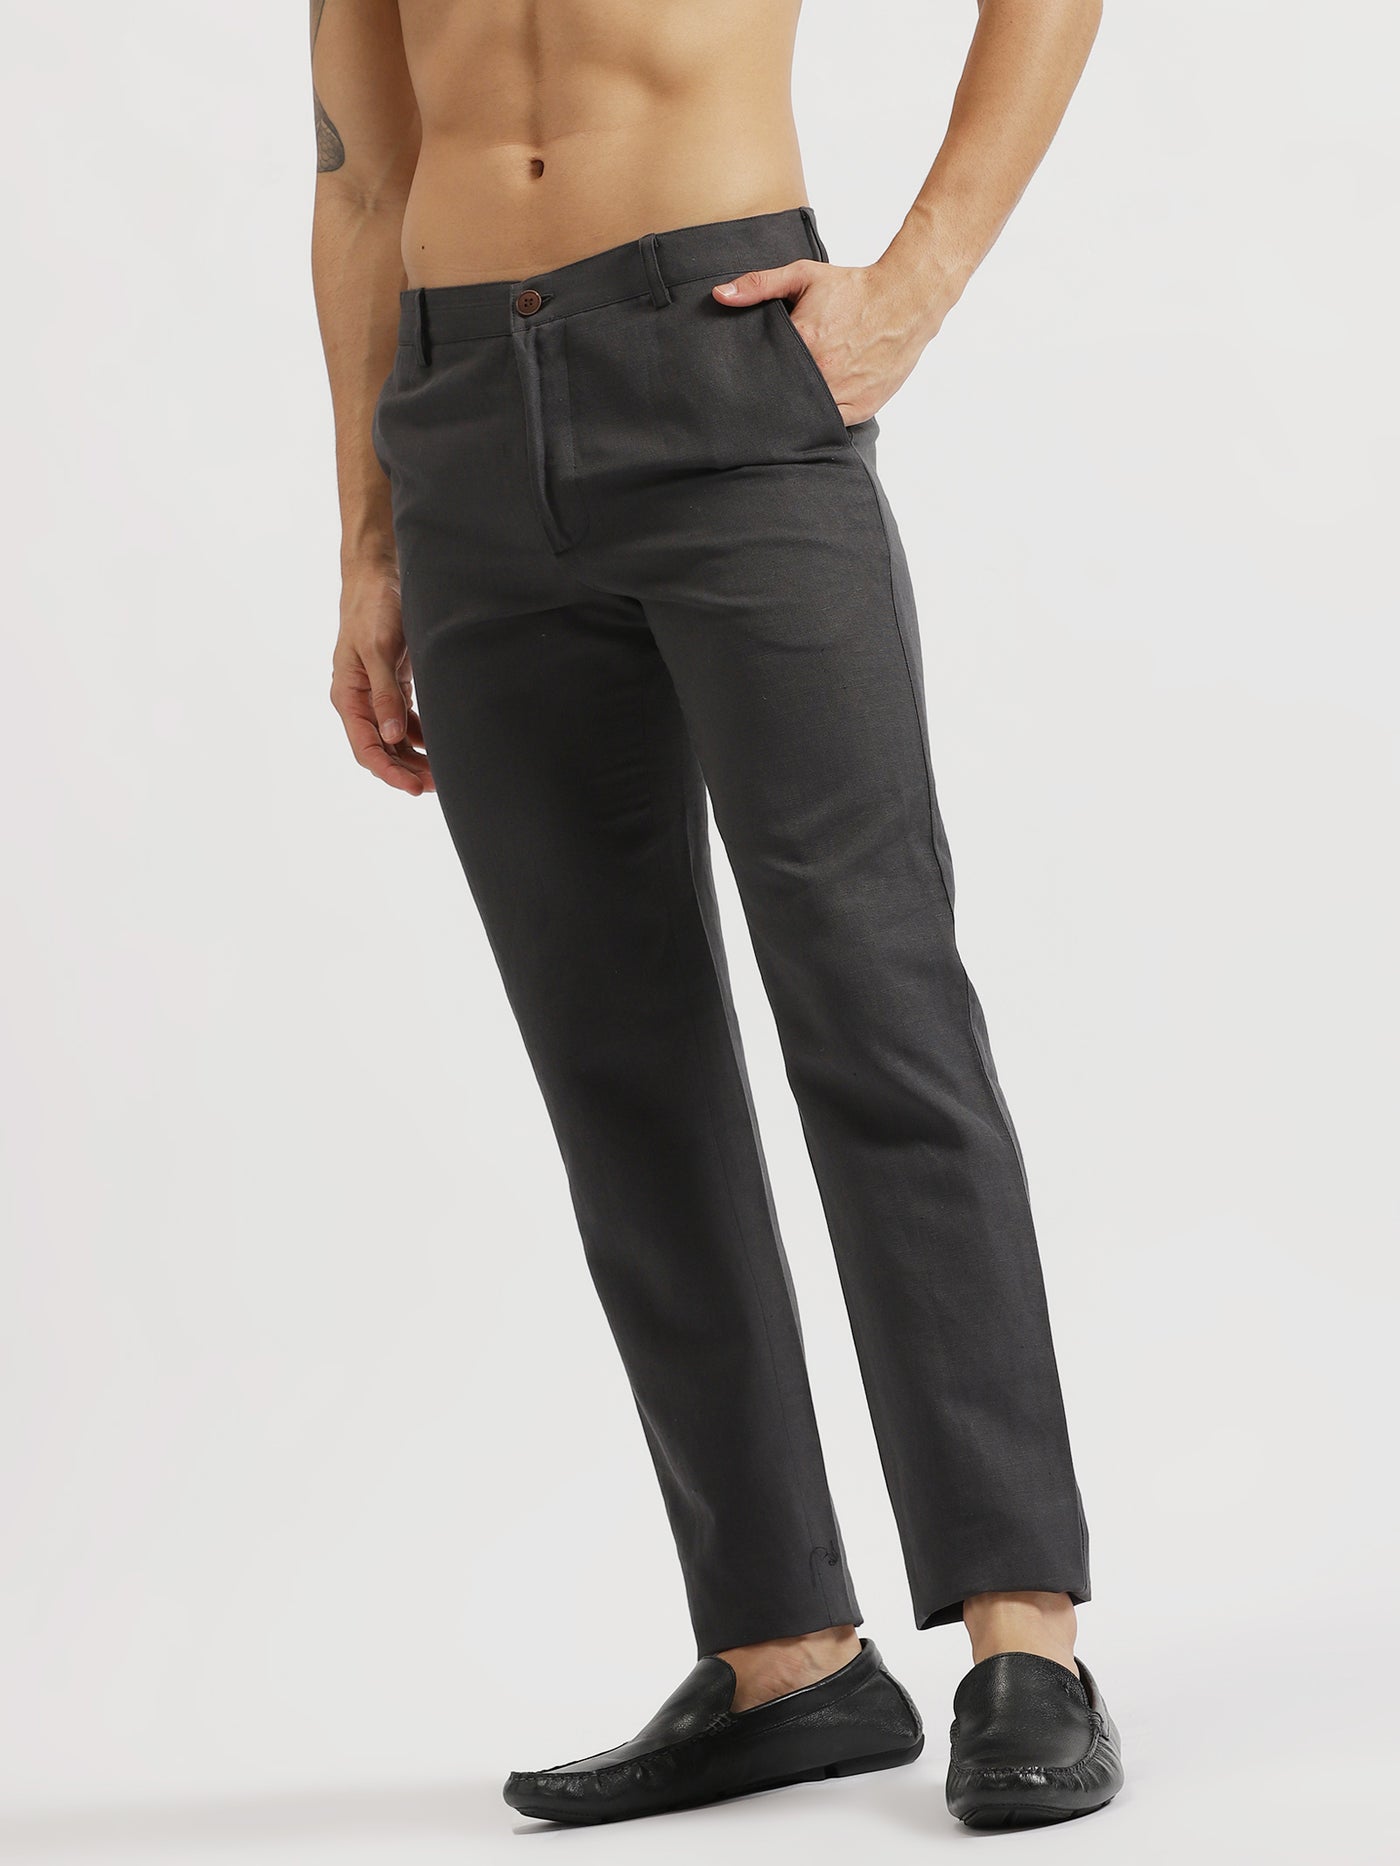 Bewakoof Casual Trousers  Buy Bewakoof Charcoal Grey Cotton Trouser Online   Nykaa Fashion